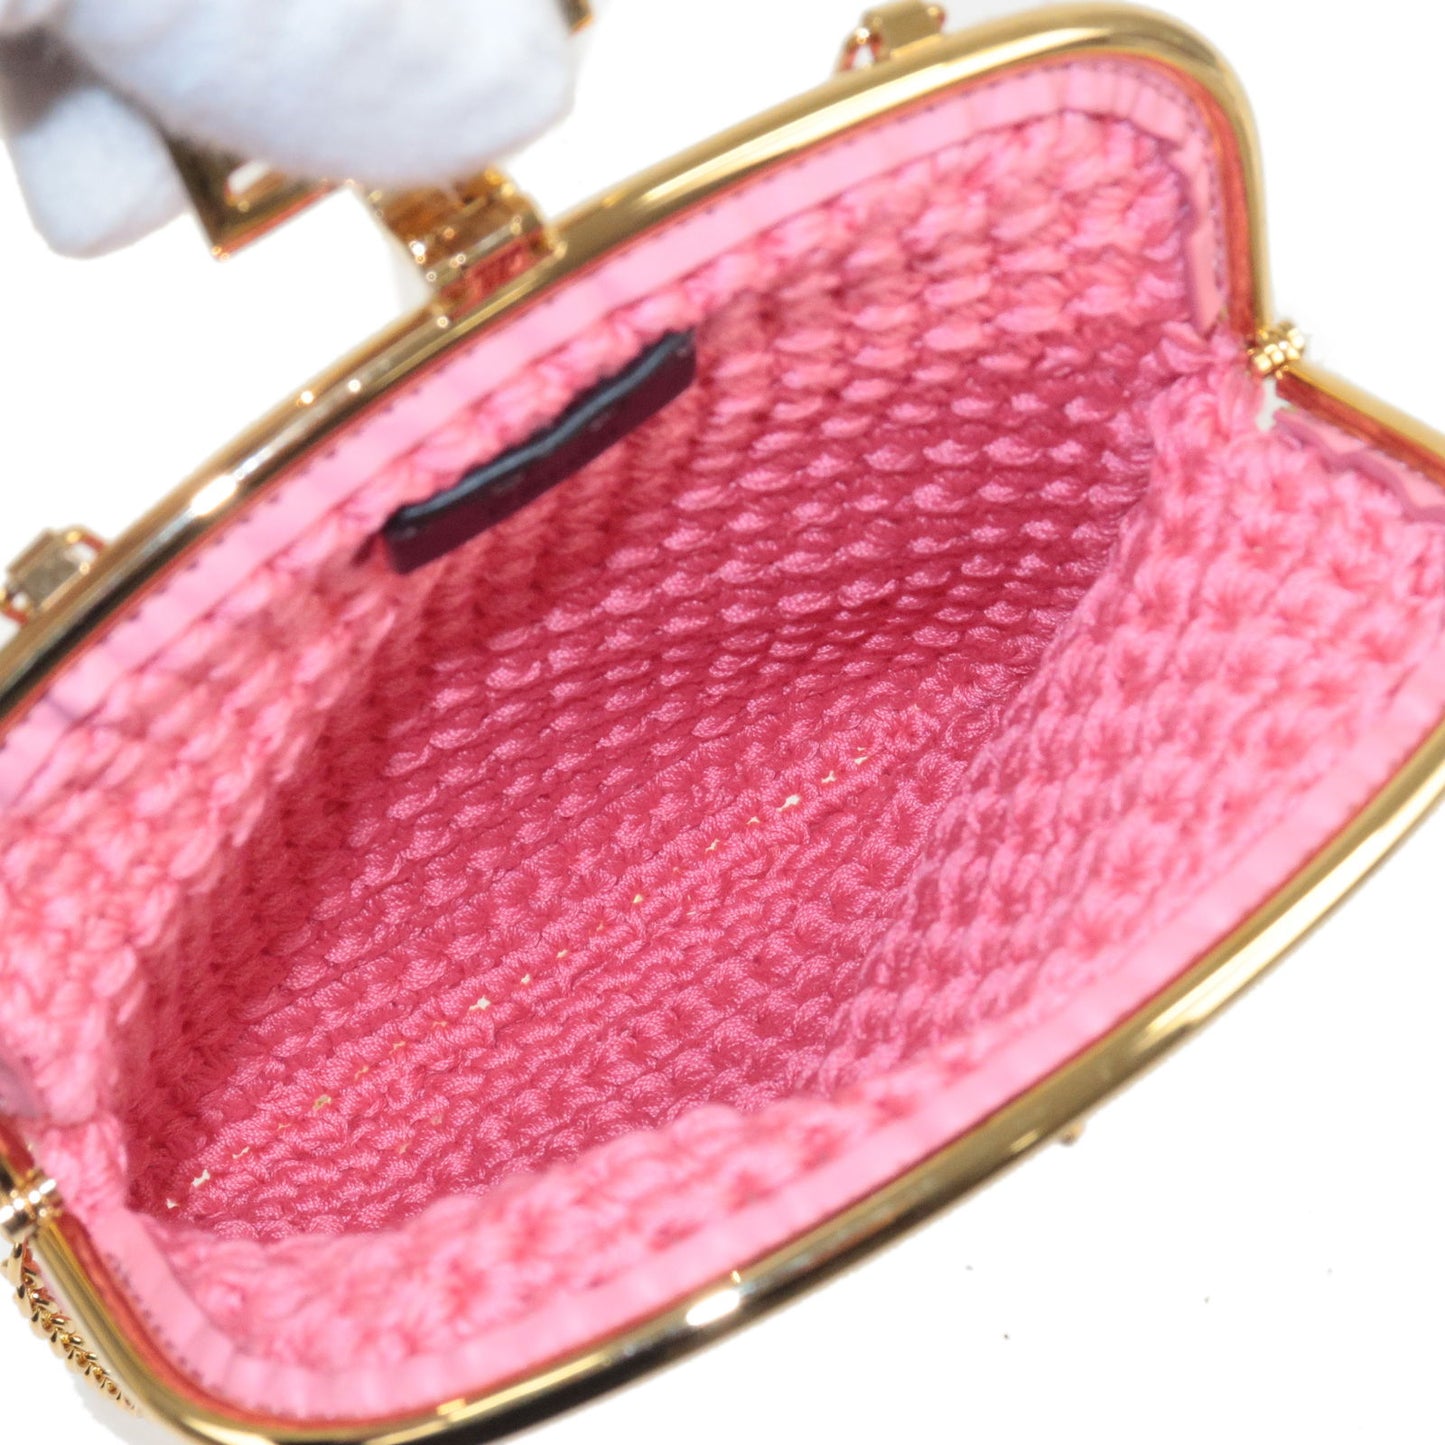 FENDI Fabric Baguette Smartphone Shoulder Bag 7AR966